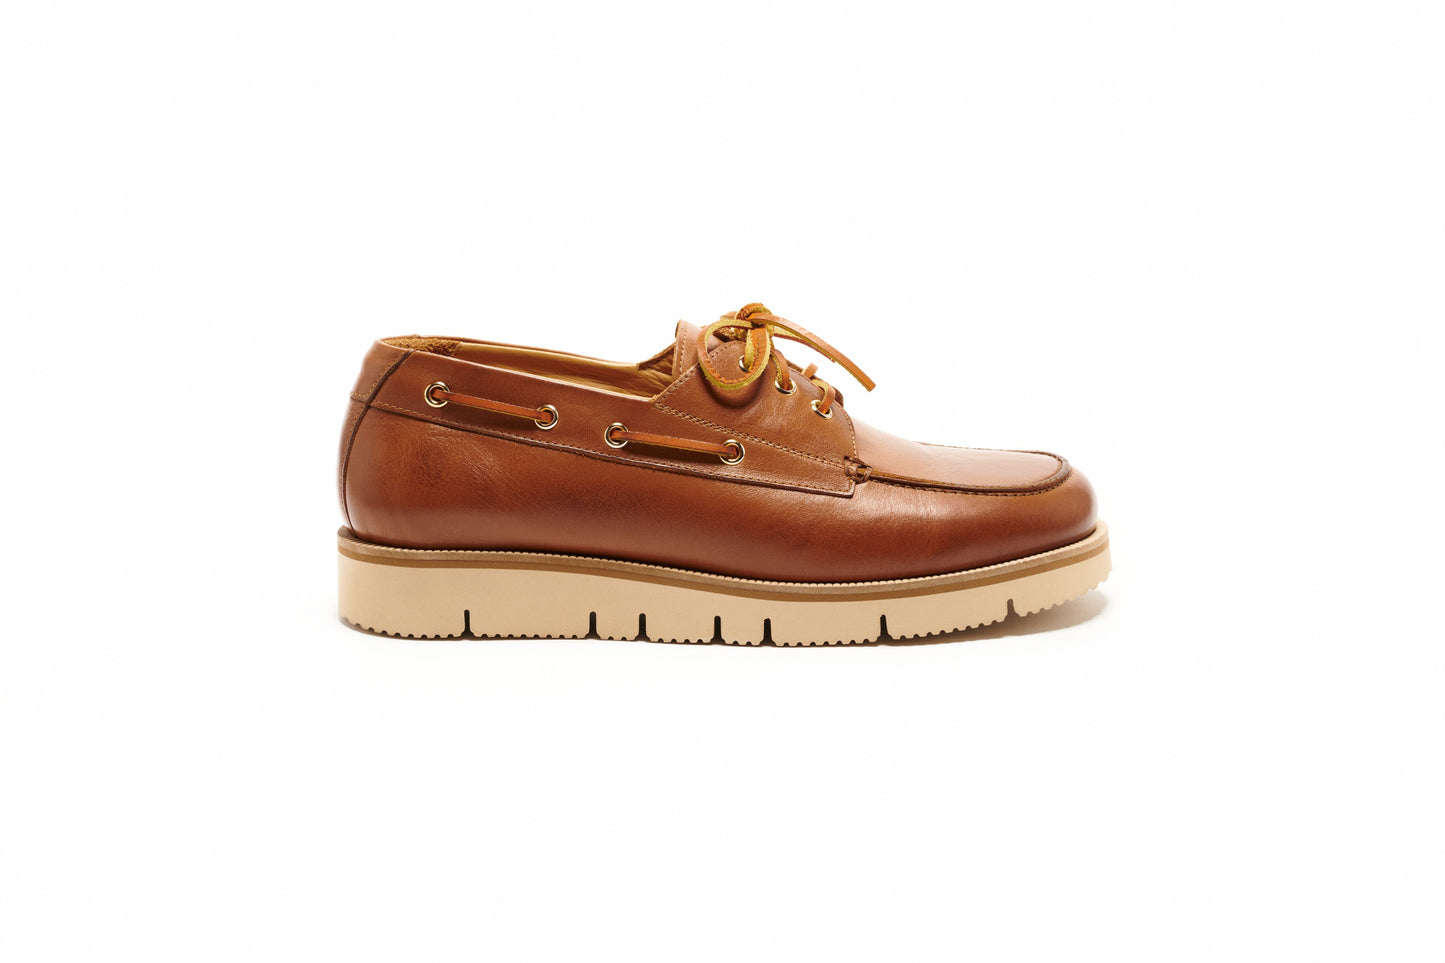 Hopkins Men's Boat Shoes - Light Brown